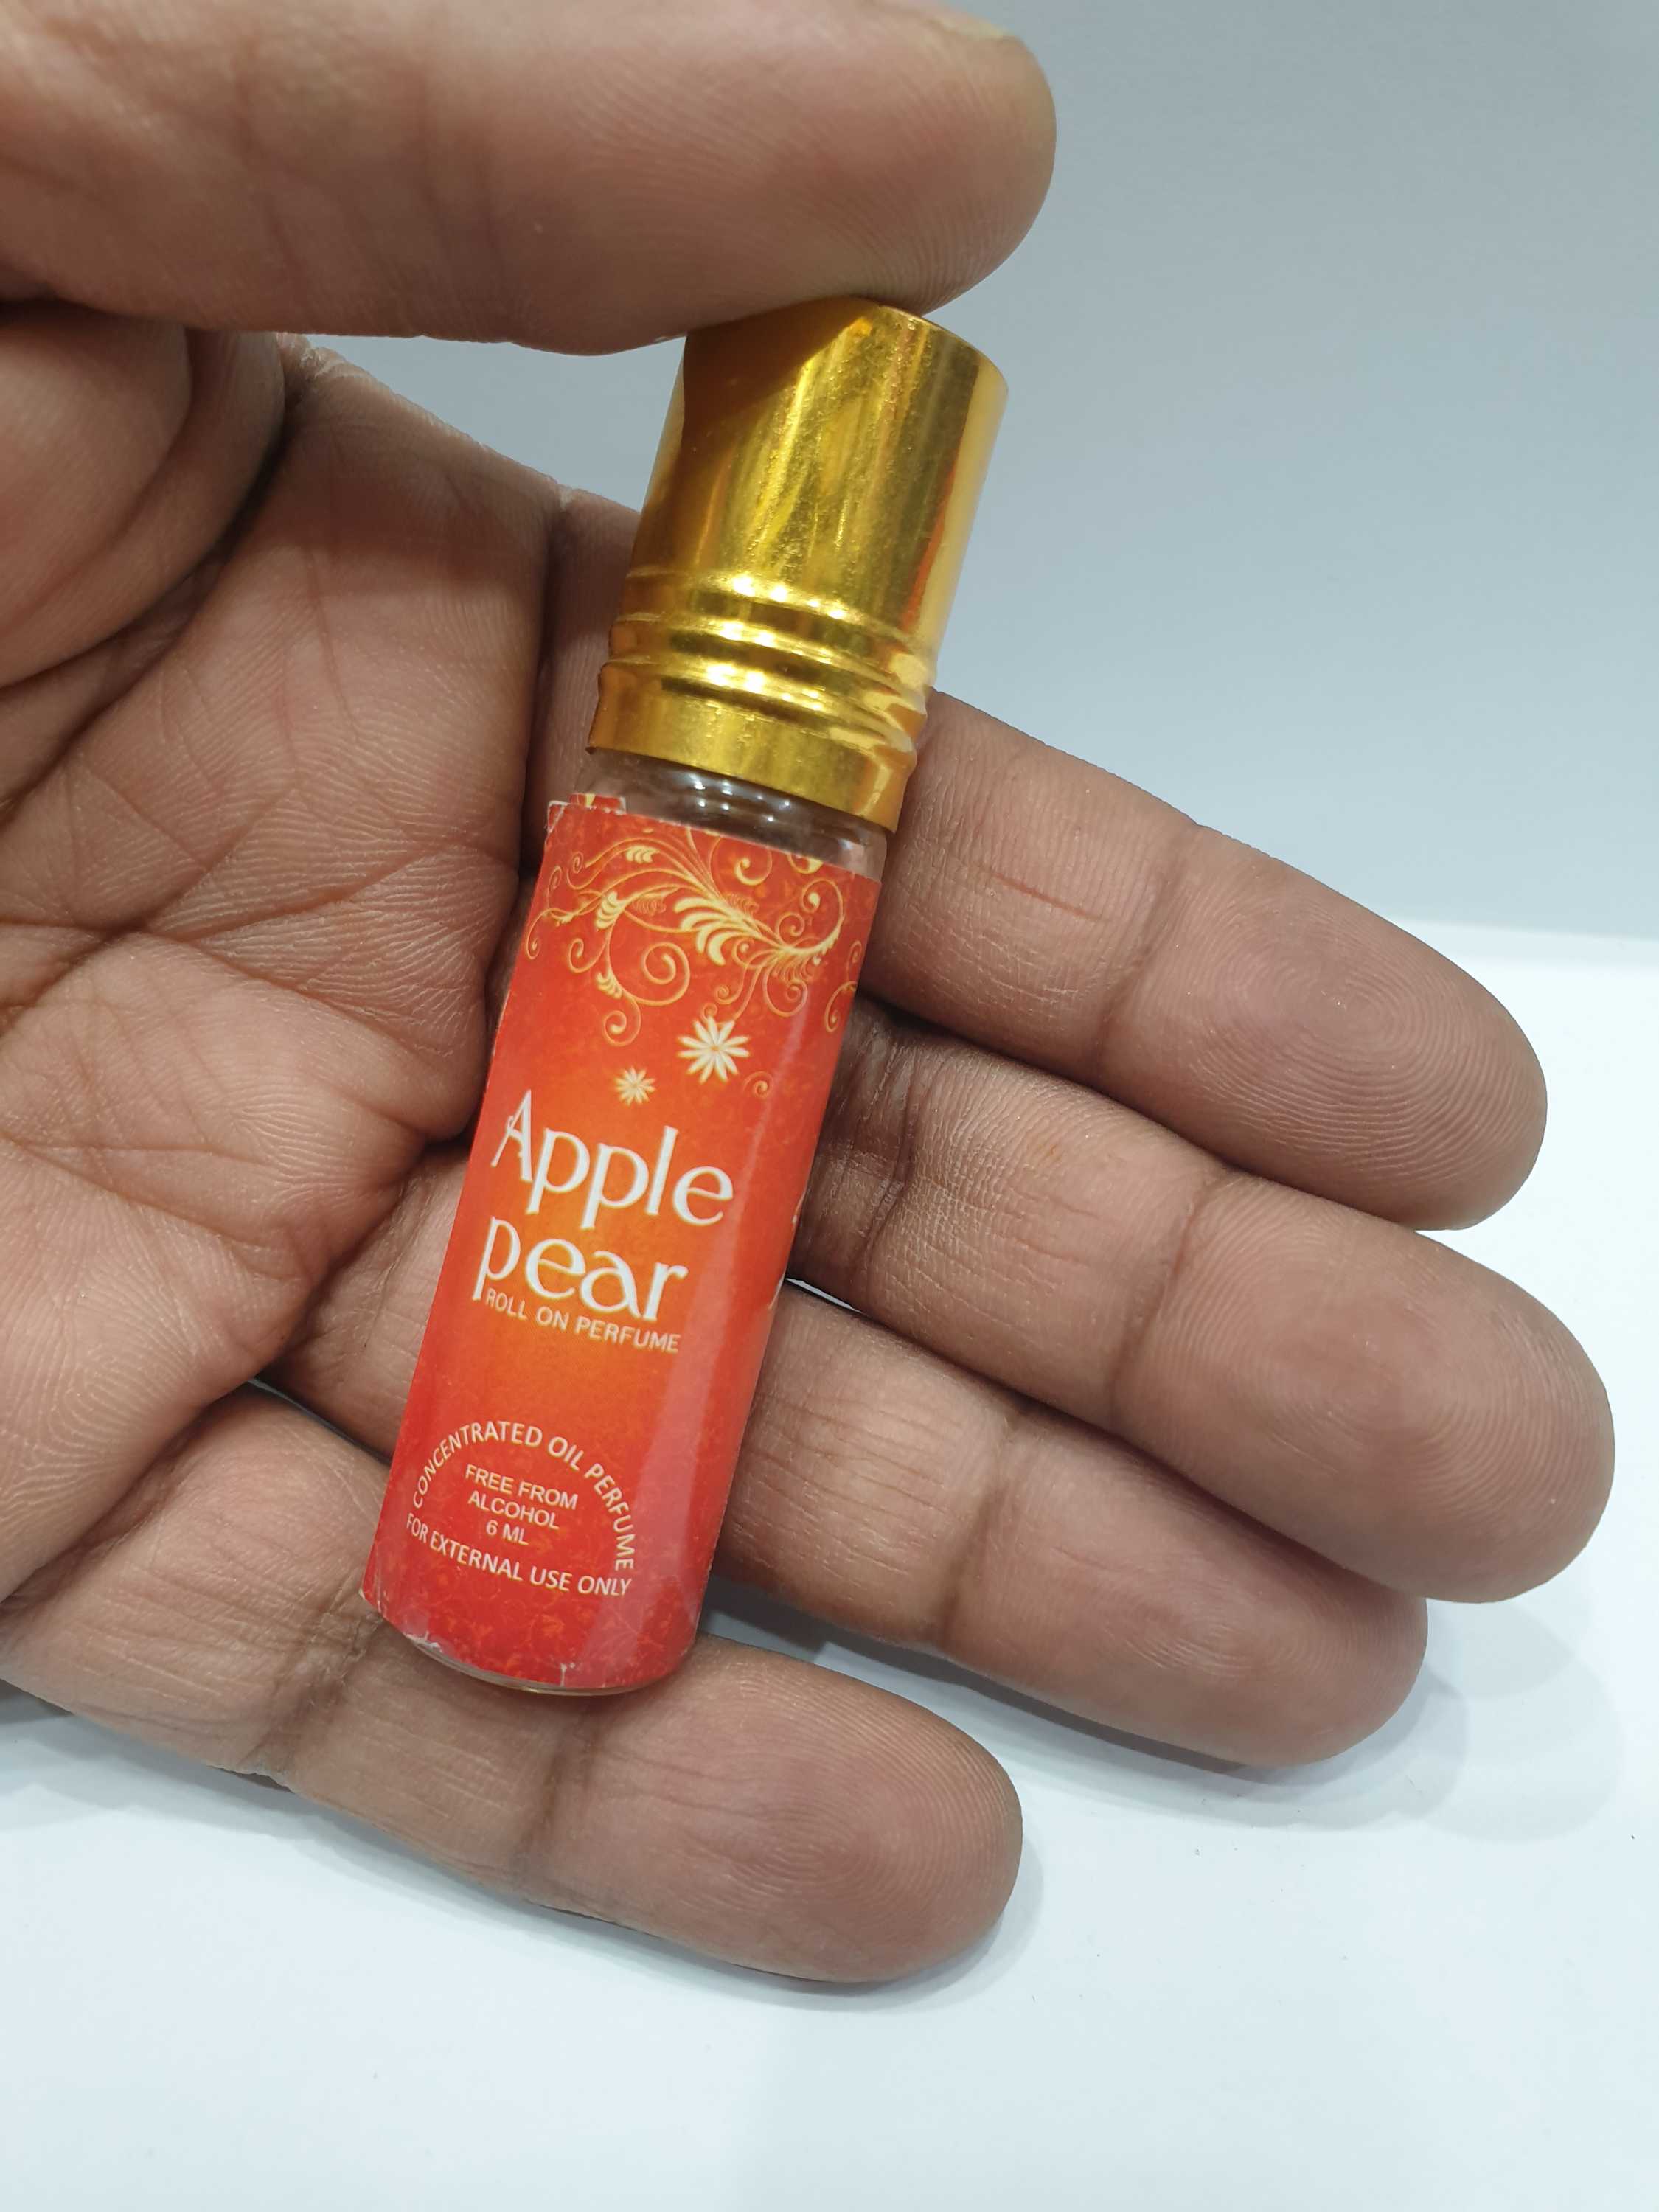 Attar - Handmade Natural Perfume Form Herbal Extract, <span Style=